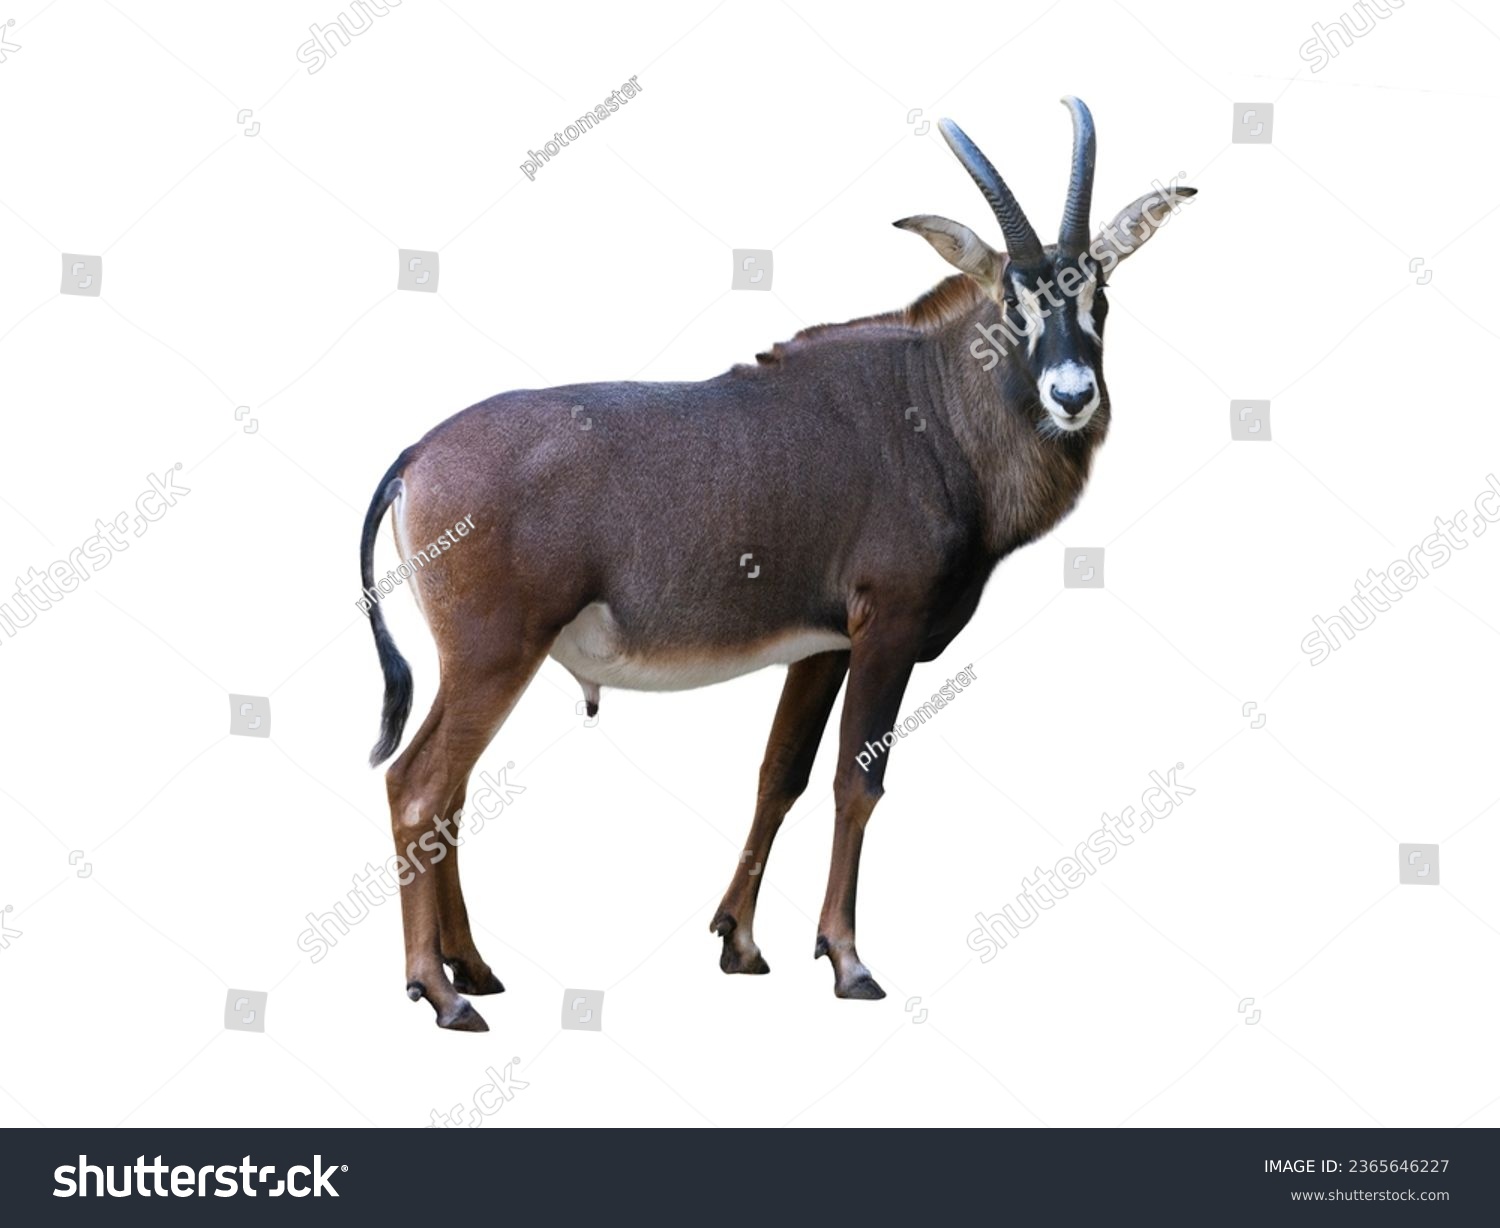  sable antelope isolated on white background #2365646227